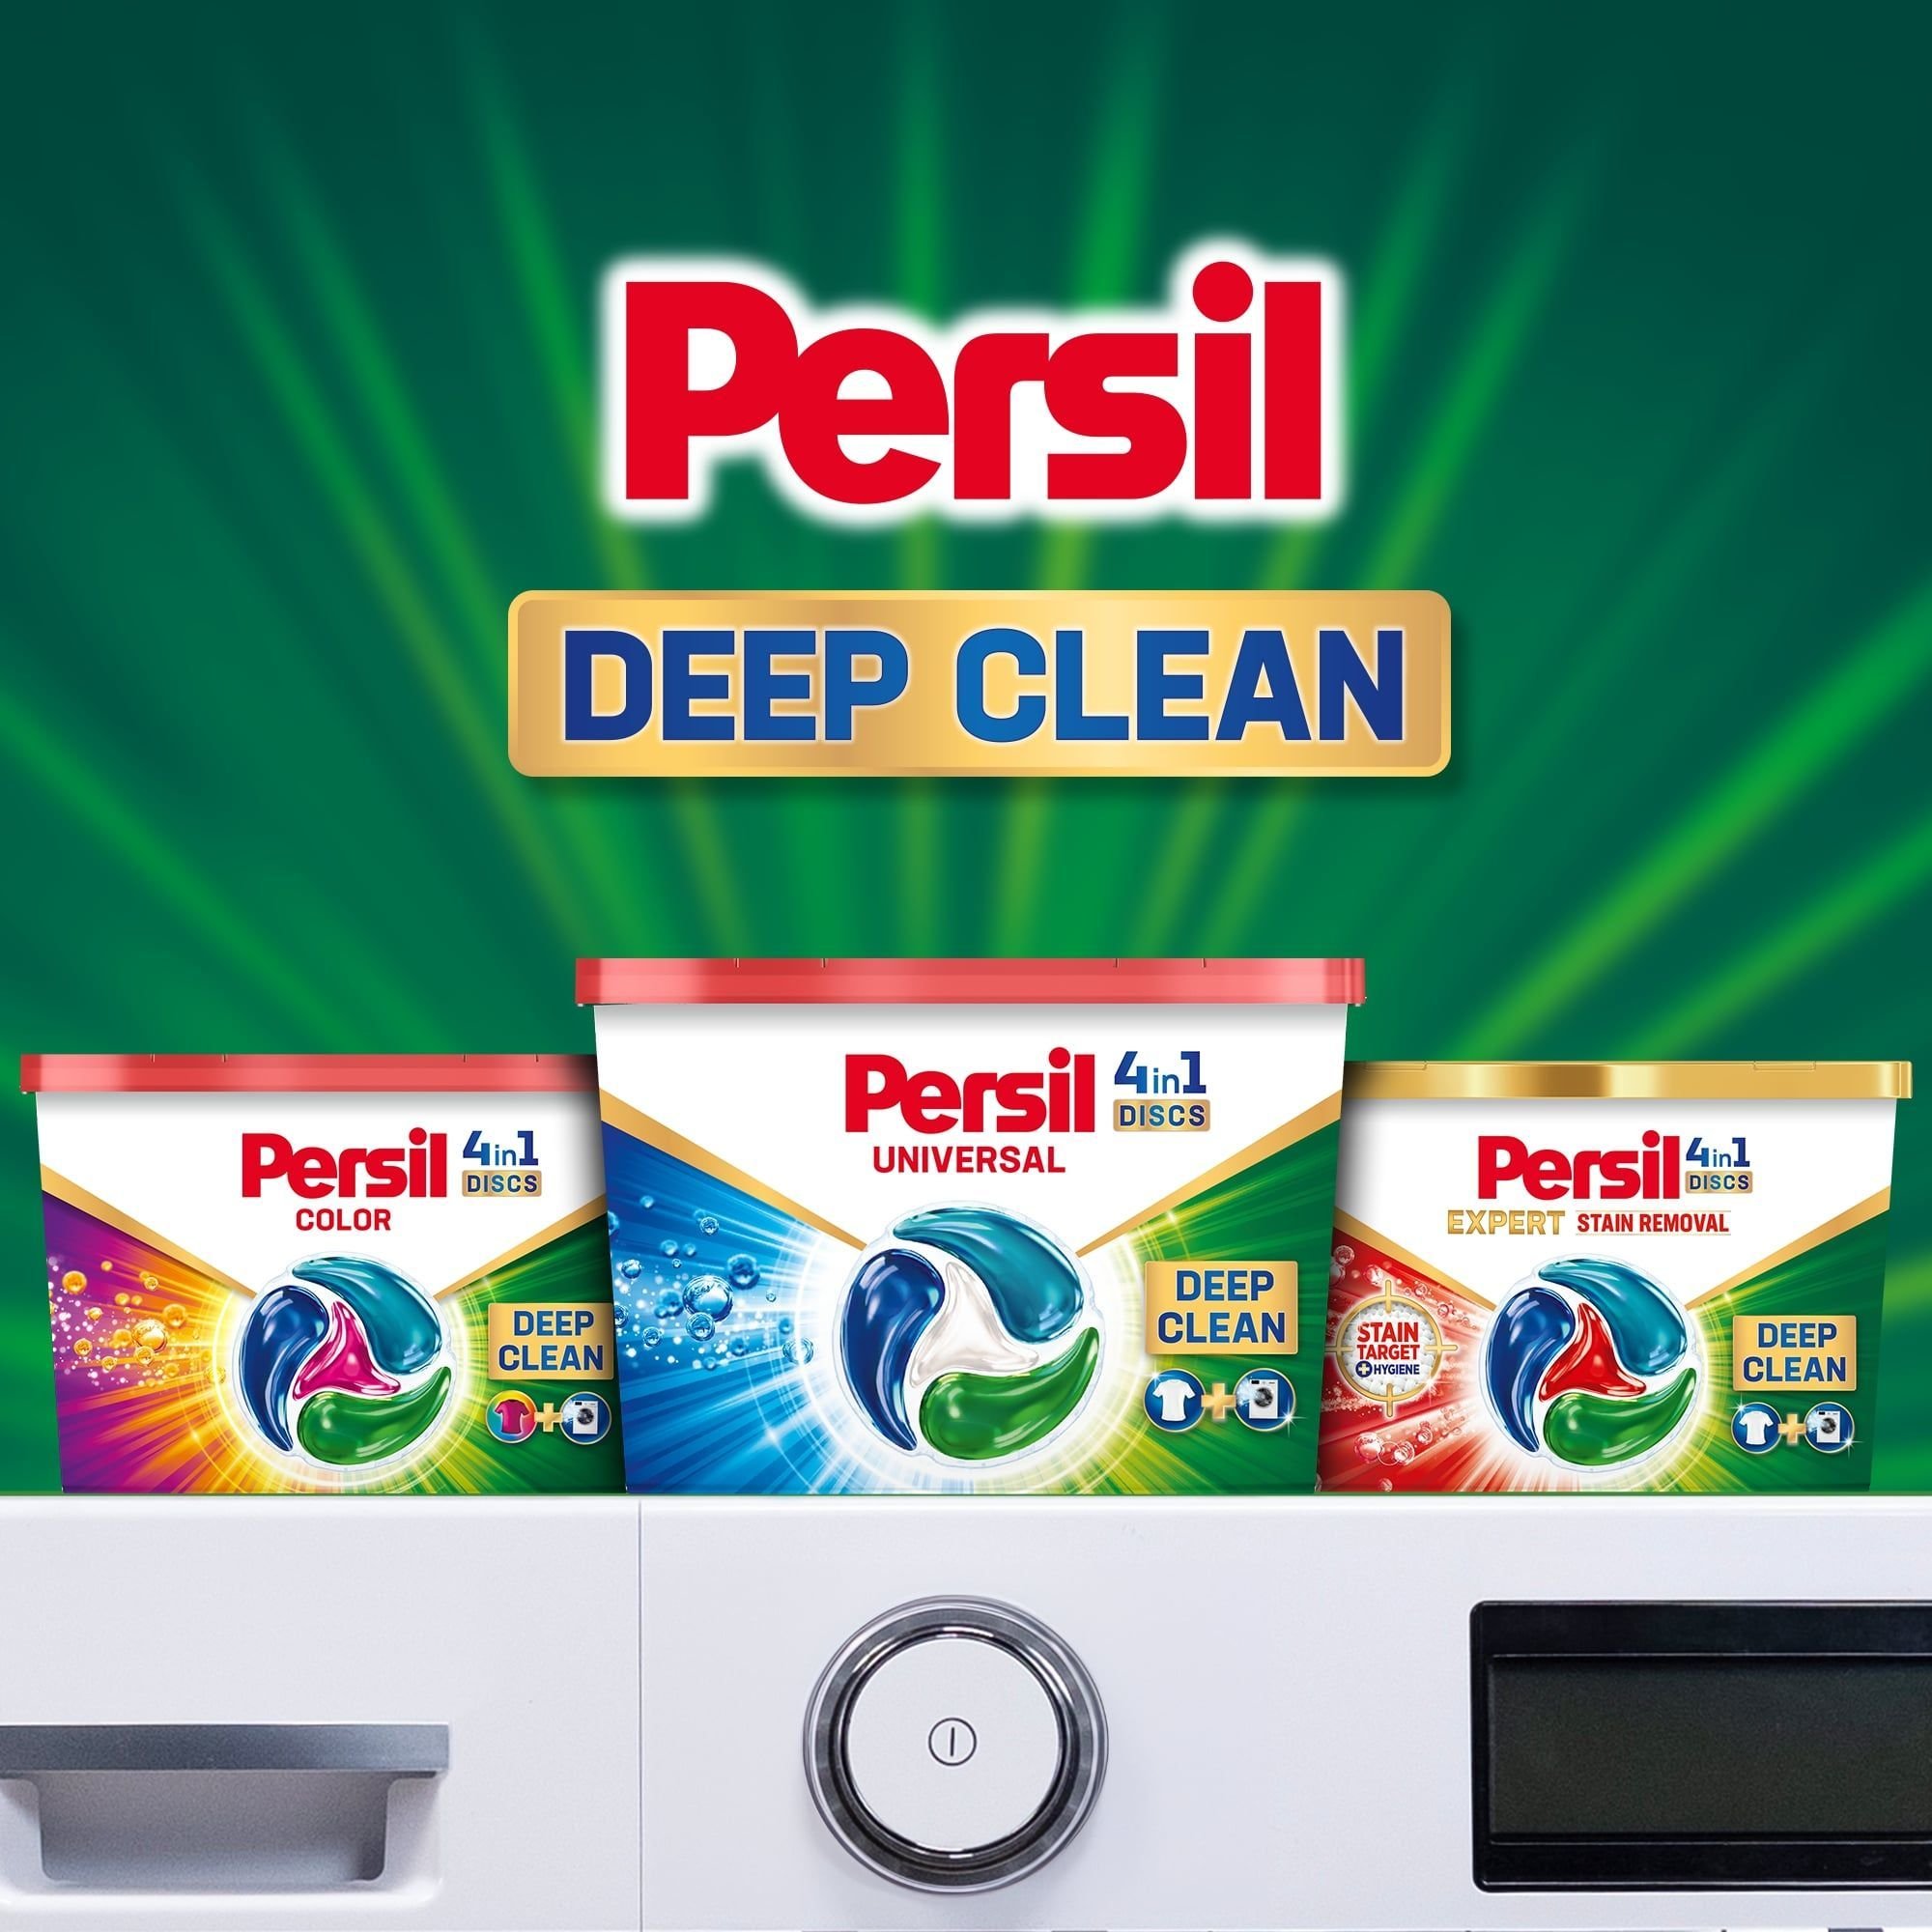 Диски для стирки Persil Deep Cleen Universal 4 in 1 Discs 54 шт. - фото 6